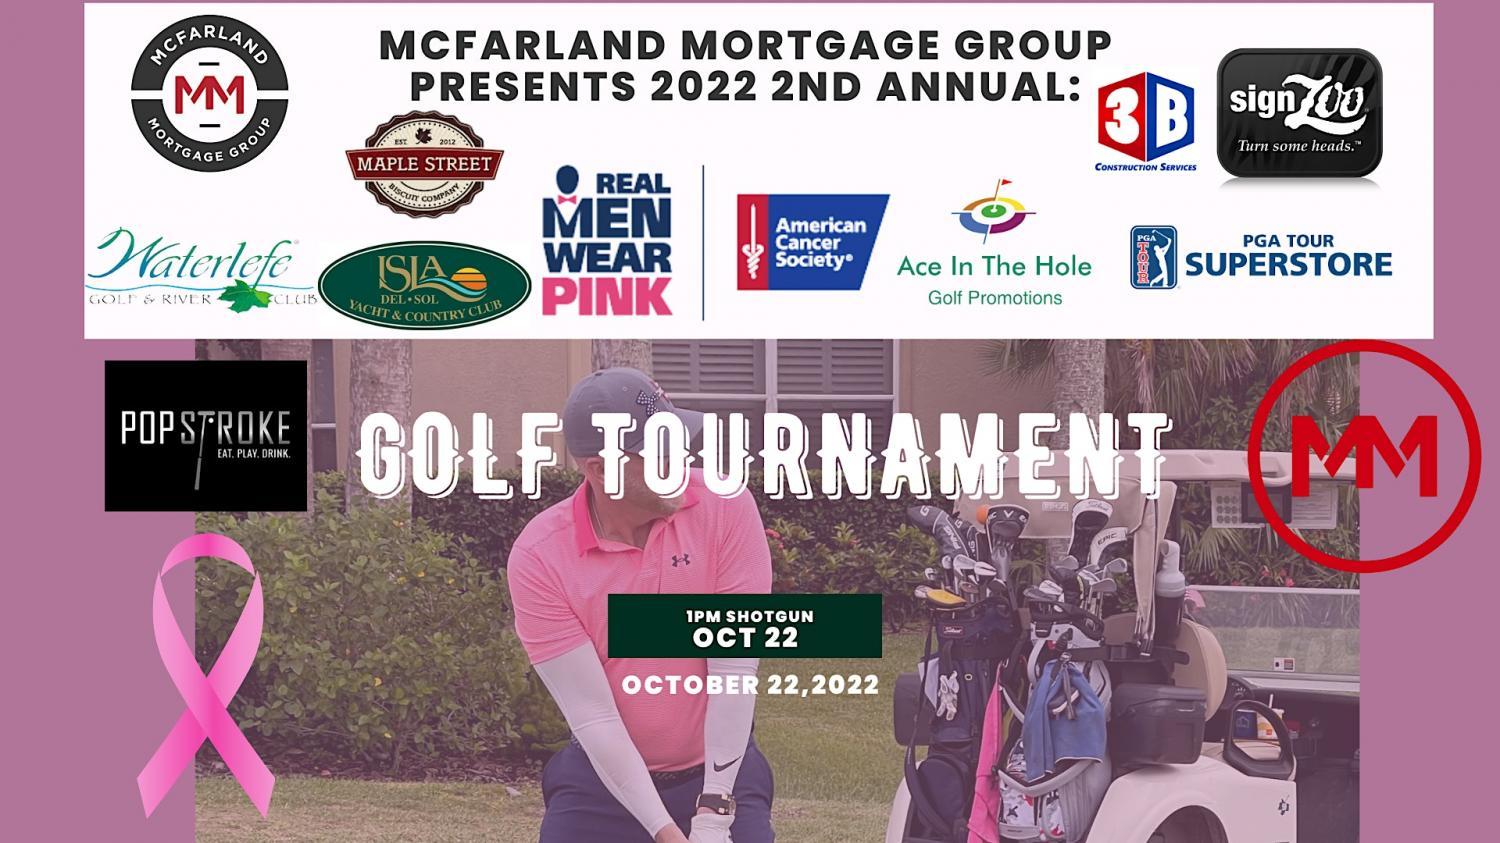 2022 Real Men Wear Pink Golf Tournament
Sat Oct 22, 7:00 PM - Sat Oct 22, 7:00 PM
in 3 days